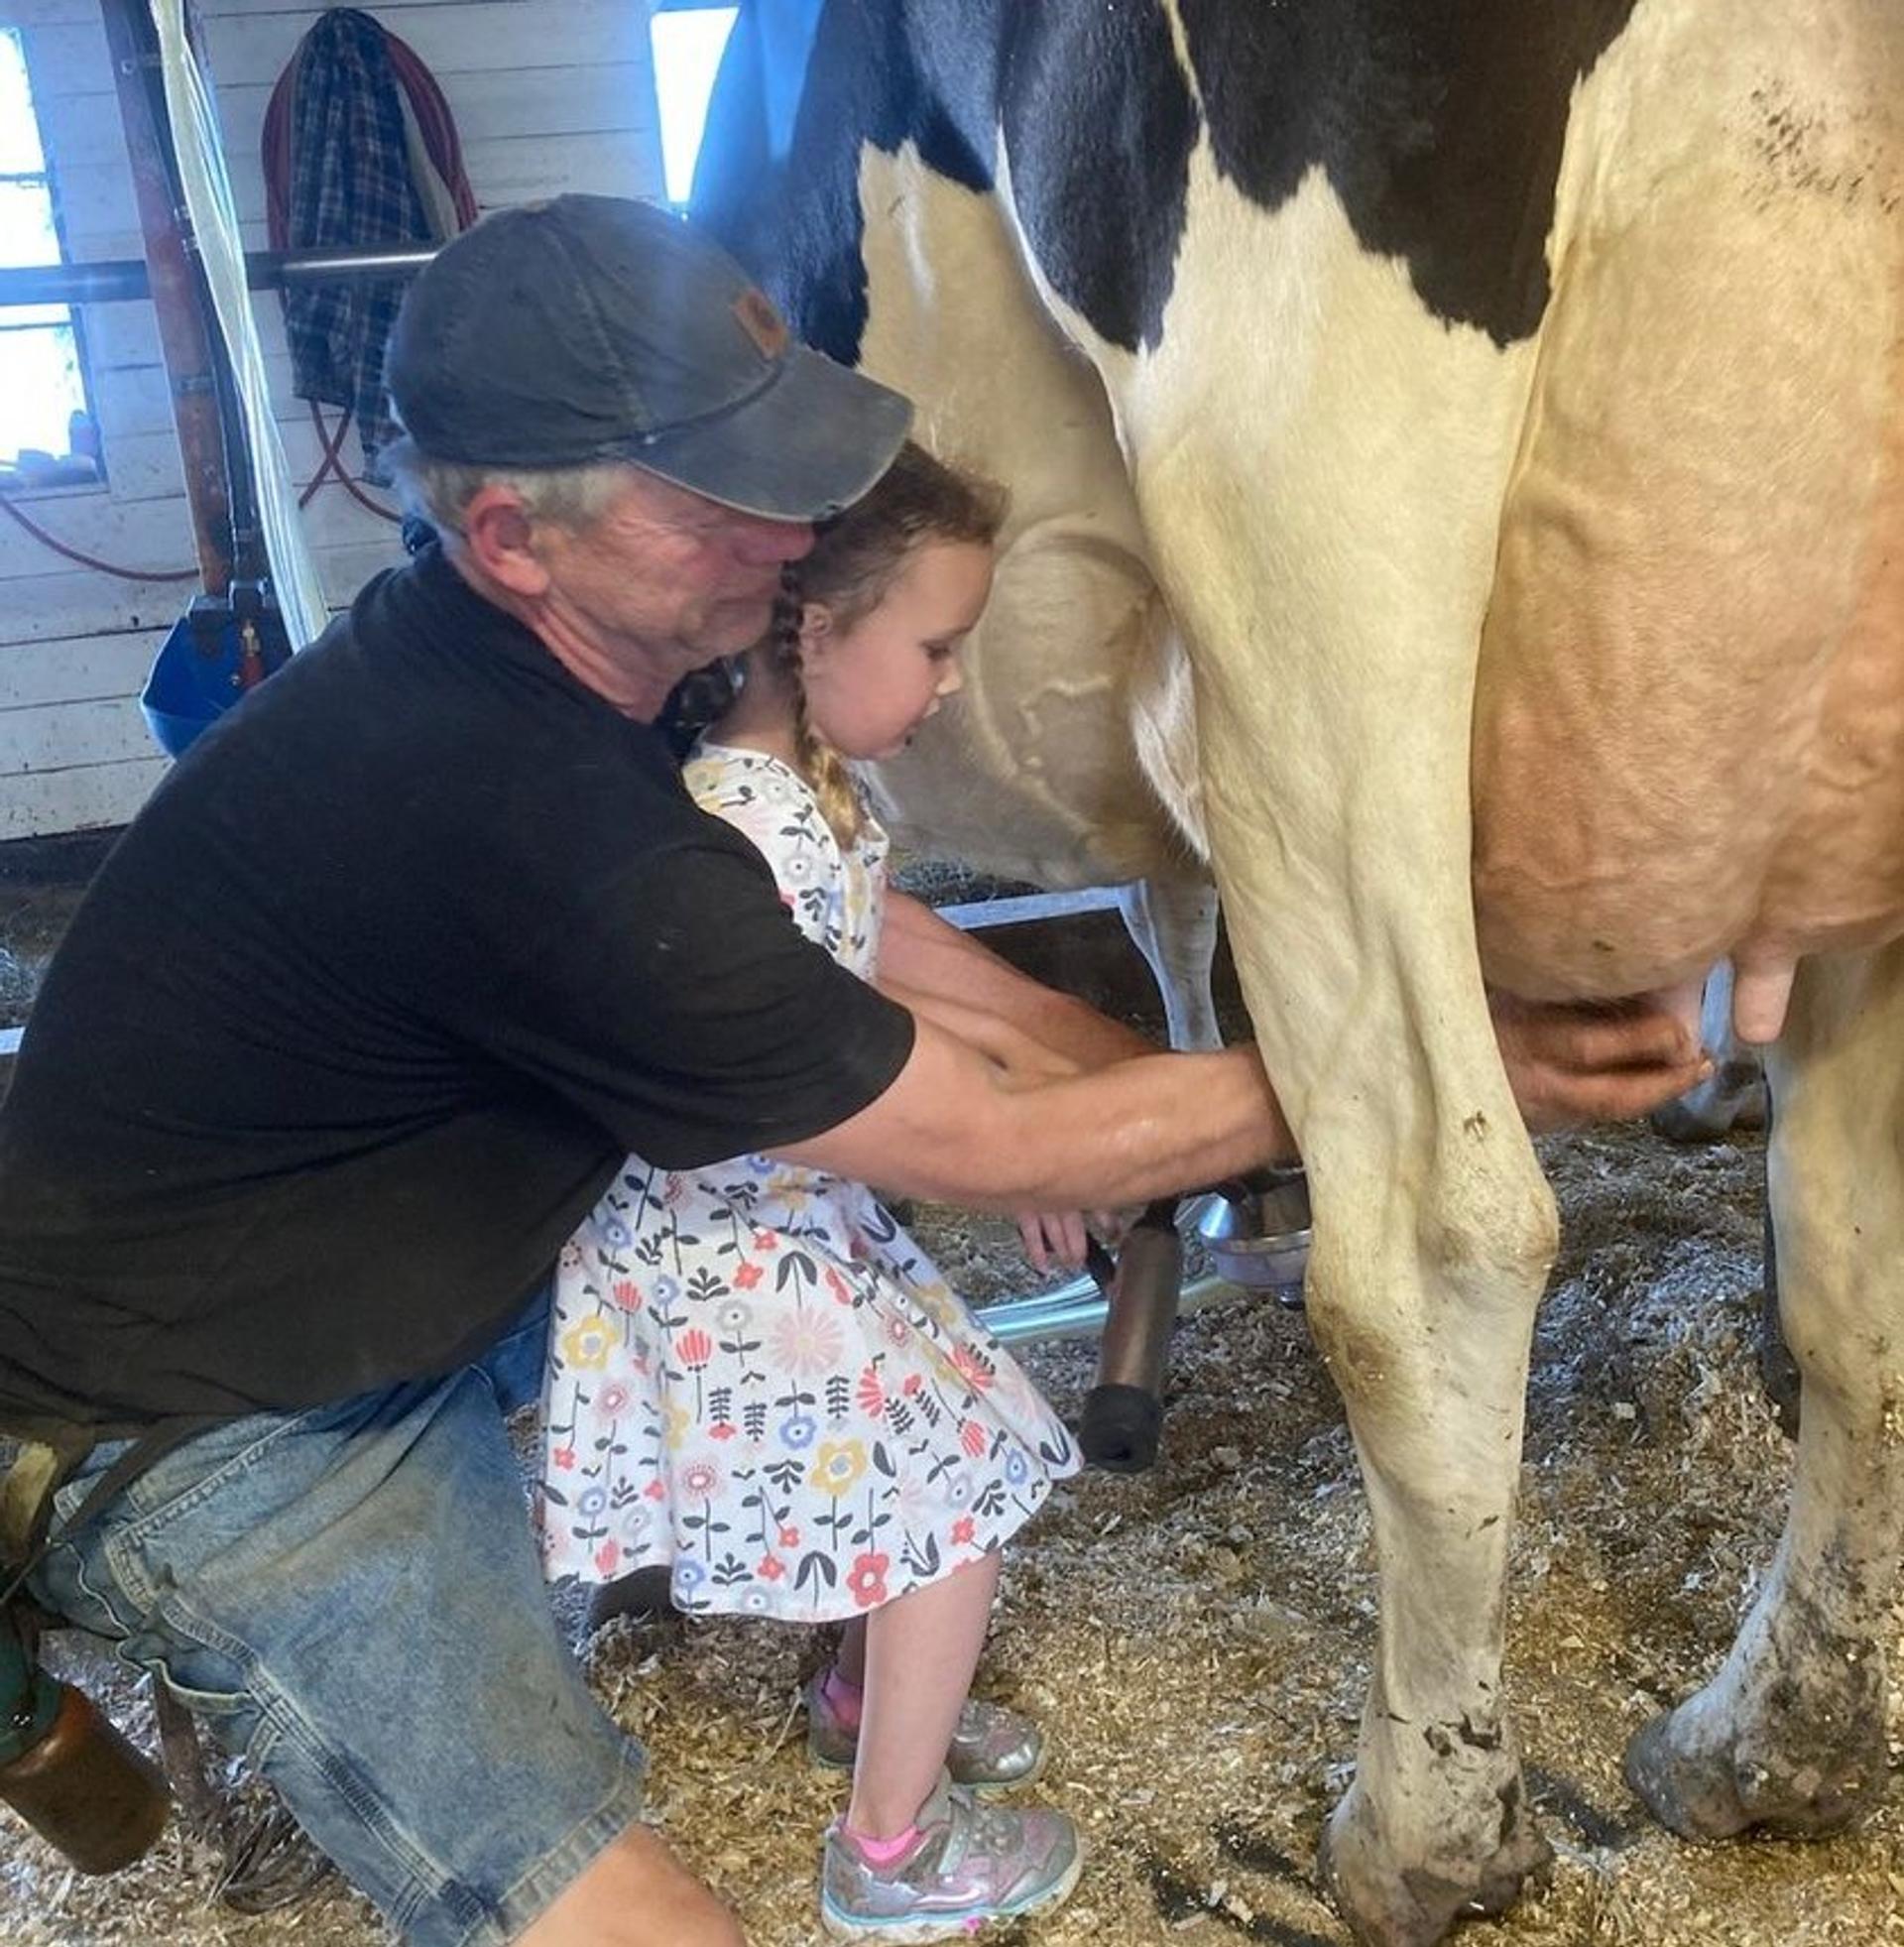 Lyle Edwards teaches his grandchild how to milk a cow.